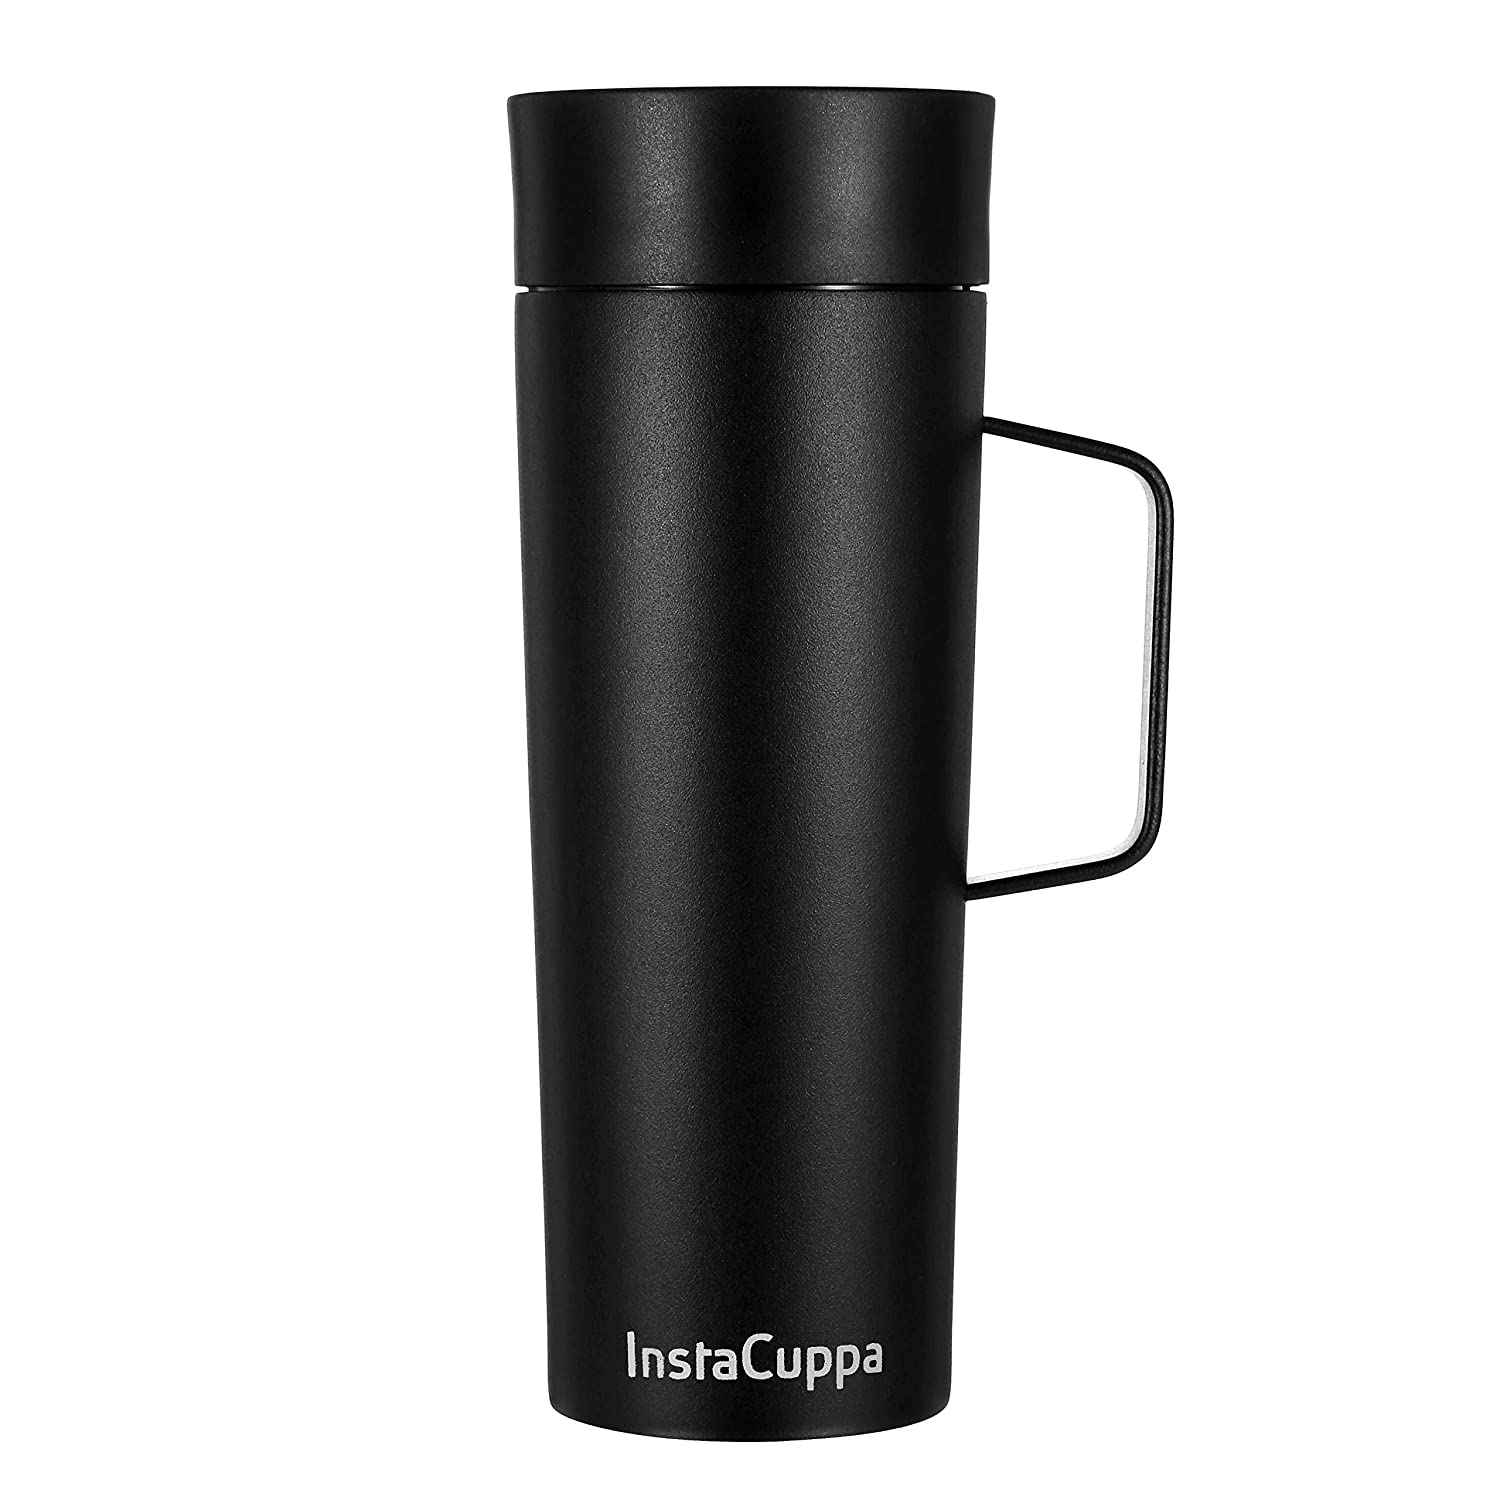 Mug, with Sipper Lid, Tea & Coffee Mug, Black, Stainless Steel